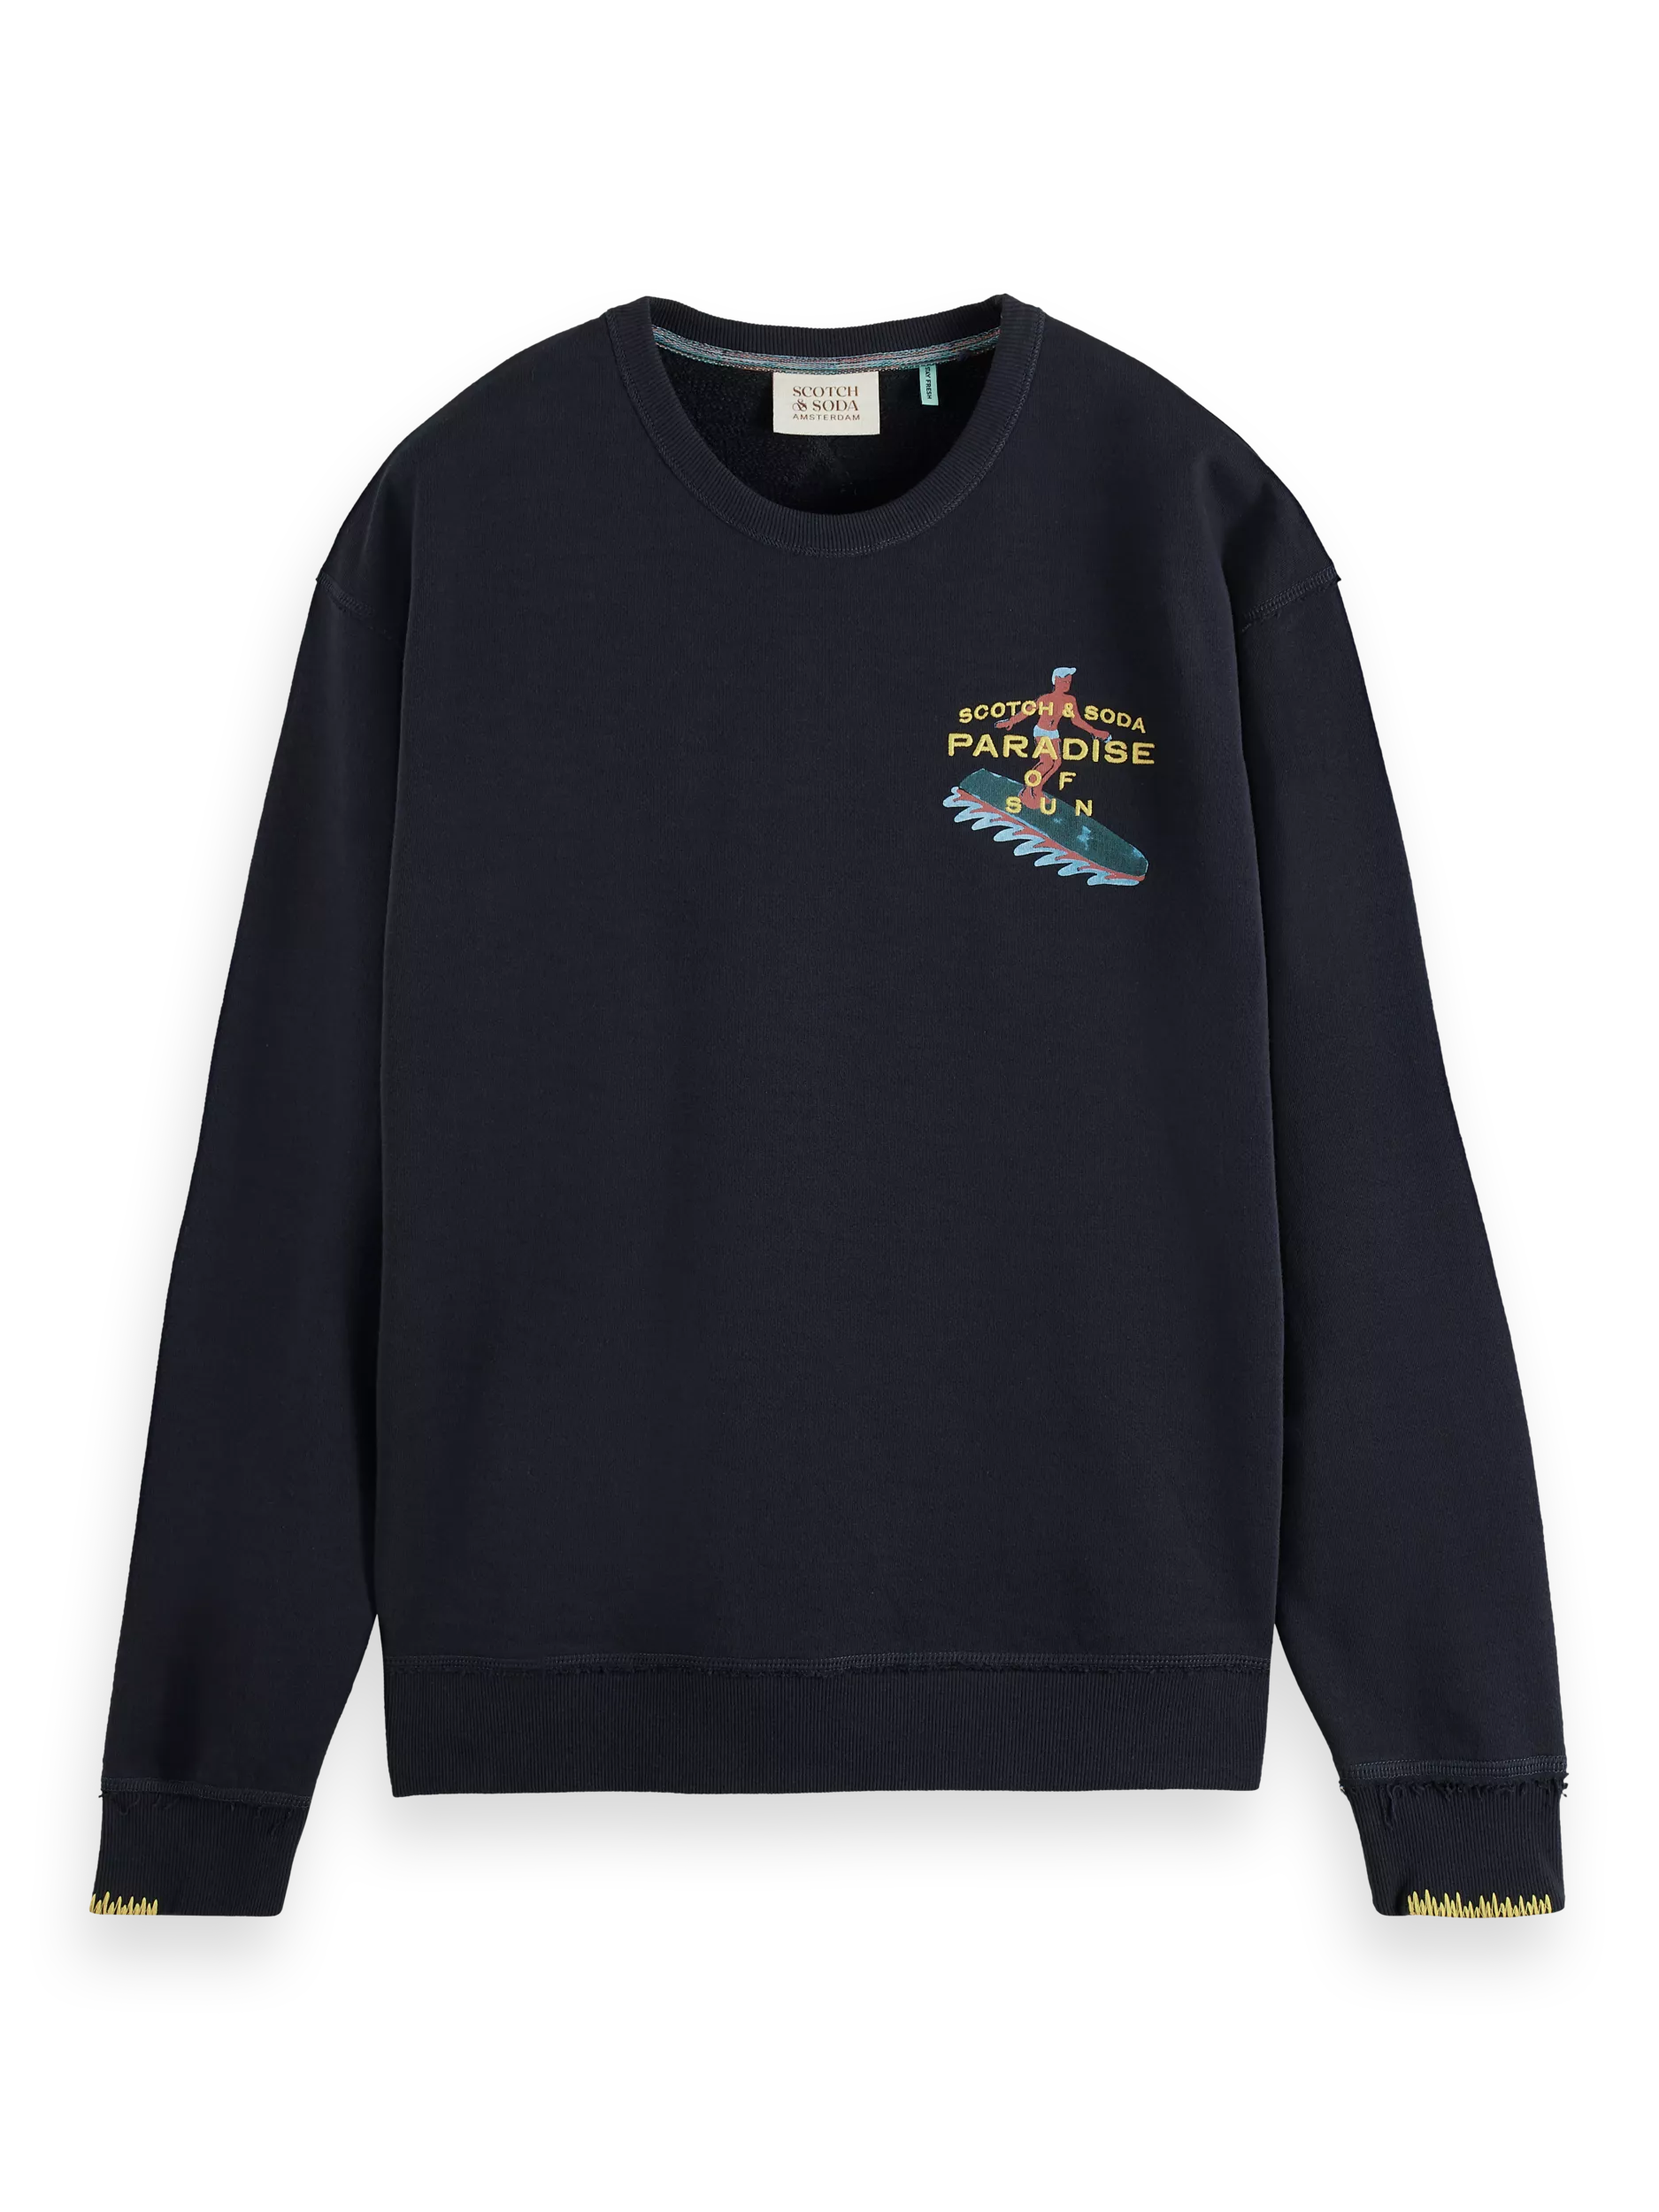 Scotch & Soda - Relaxed Fit Artwork Sweatshirt - Navy